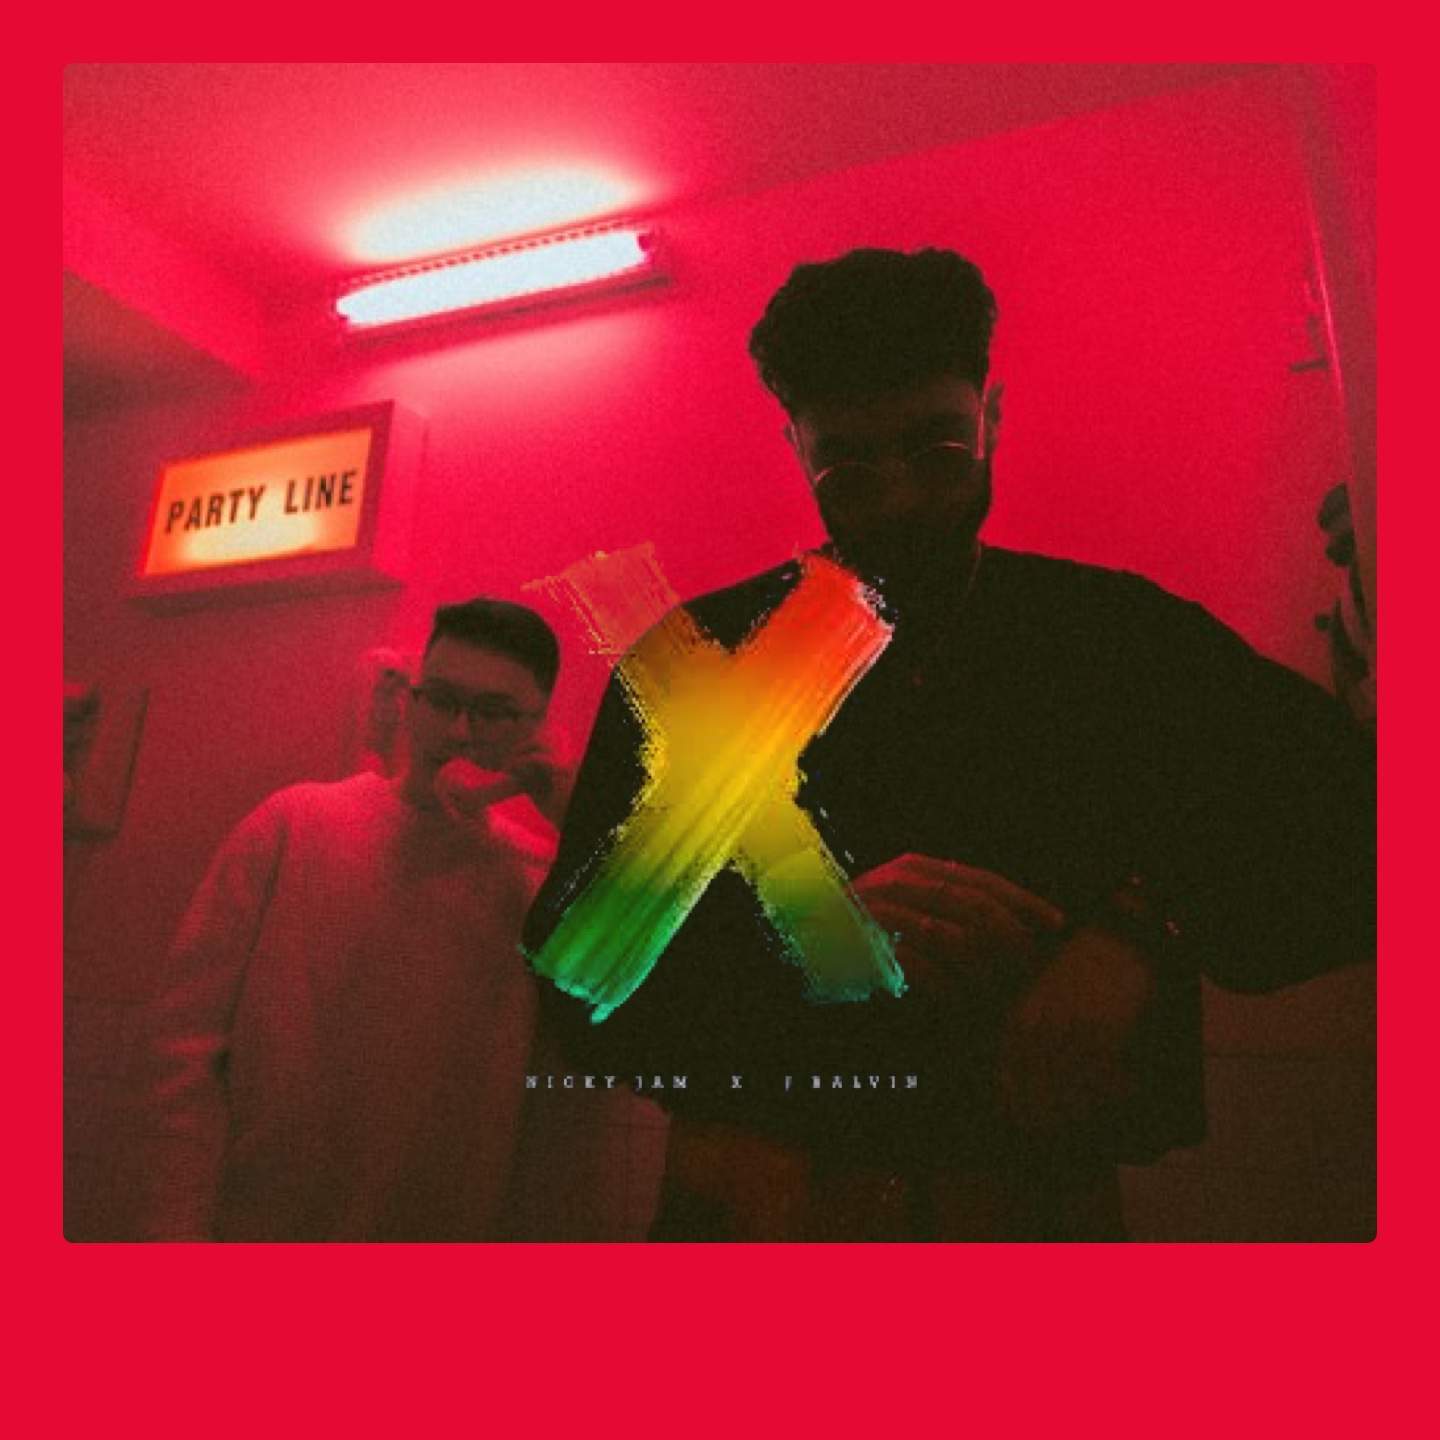 X feat. Nicky Jam & J Balvin (Cureton Remix) -
                    Luxe radio